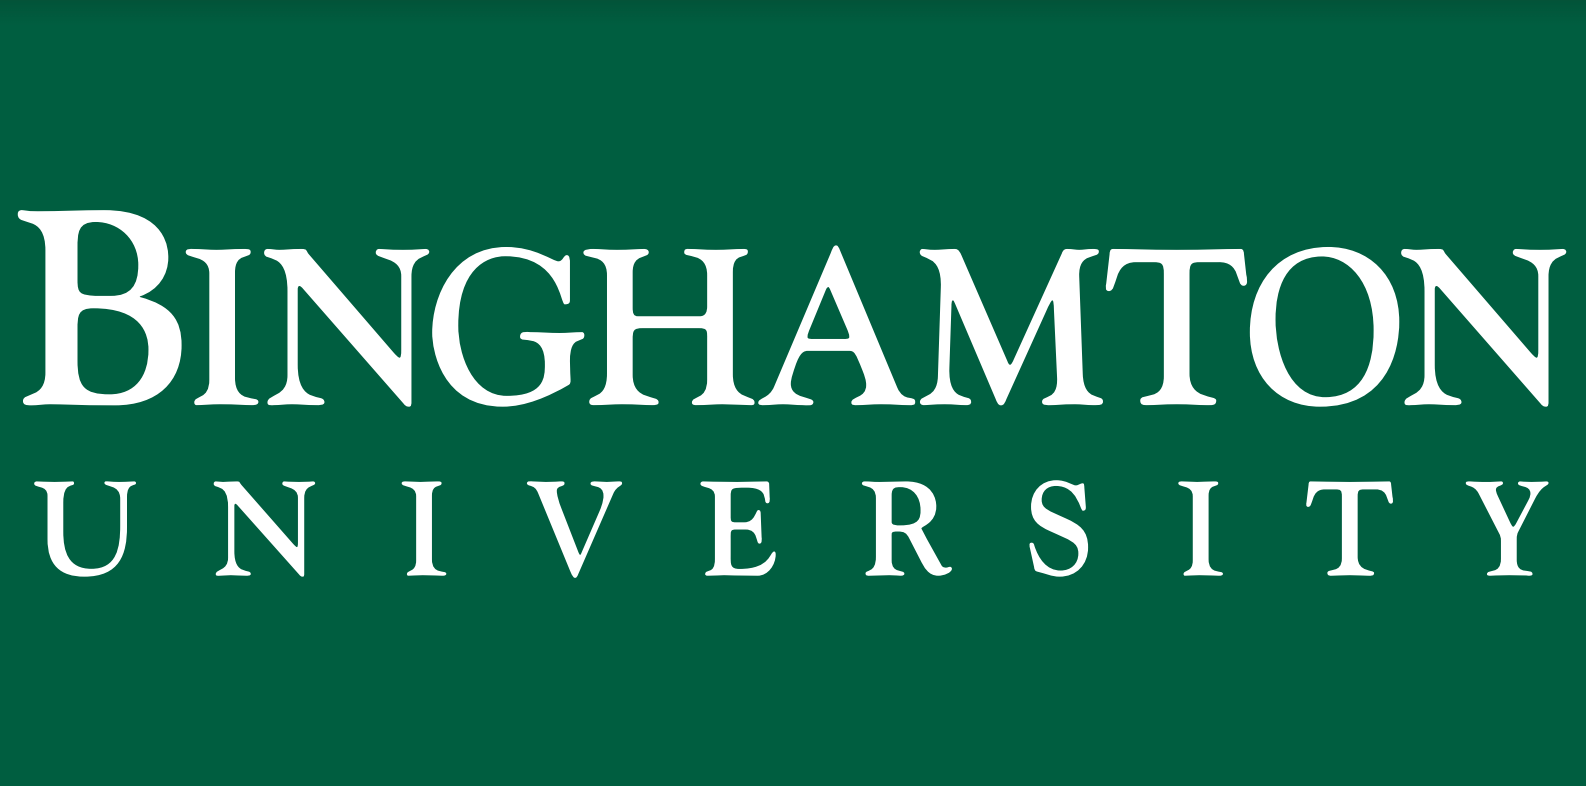 Binghamton University Logo Image.